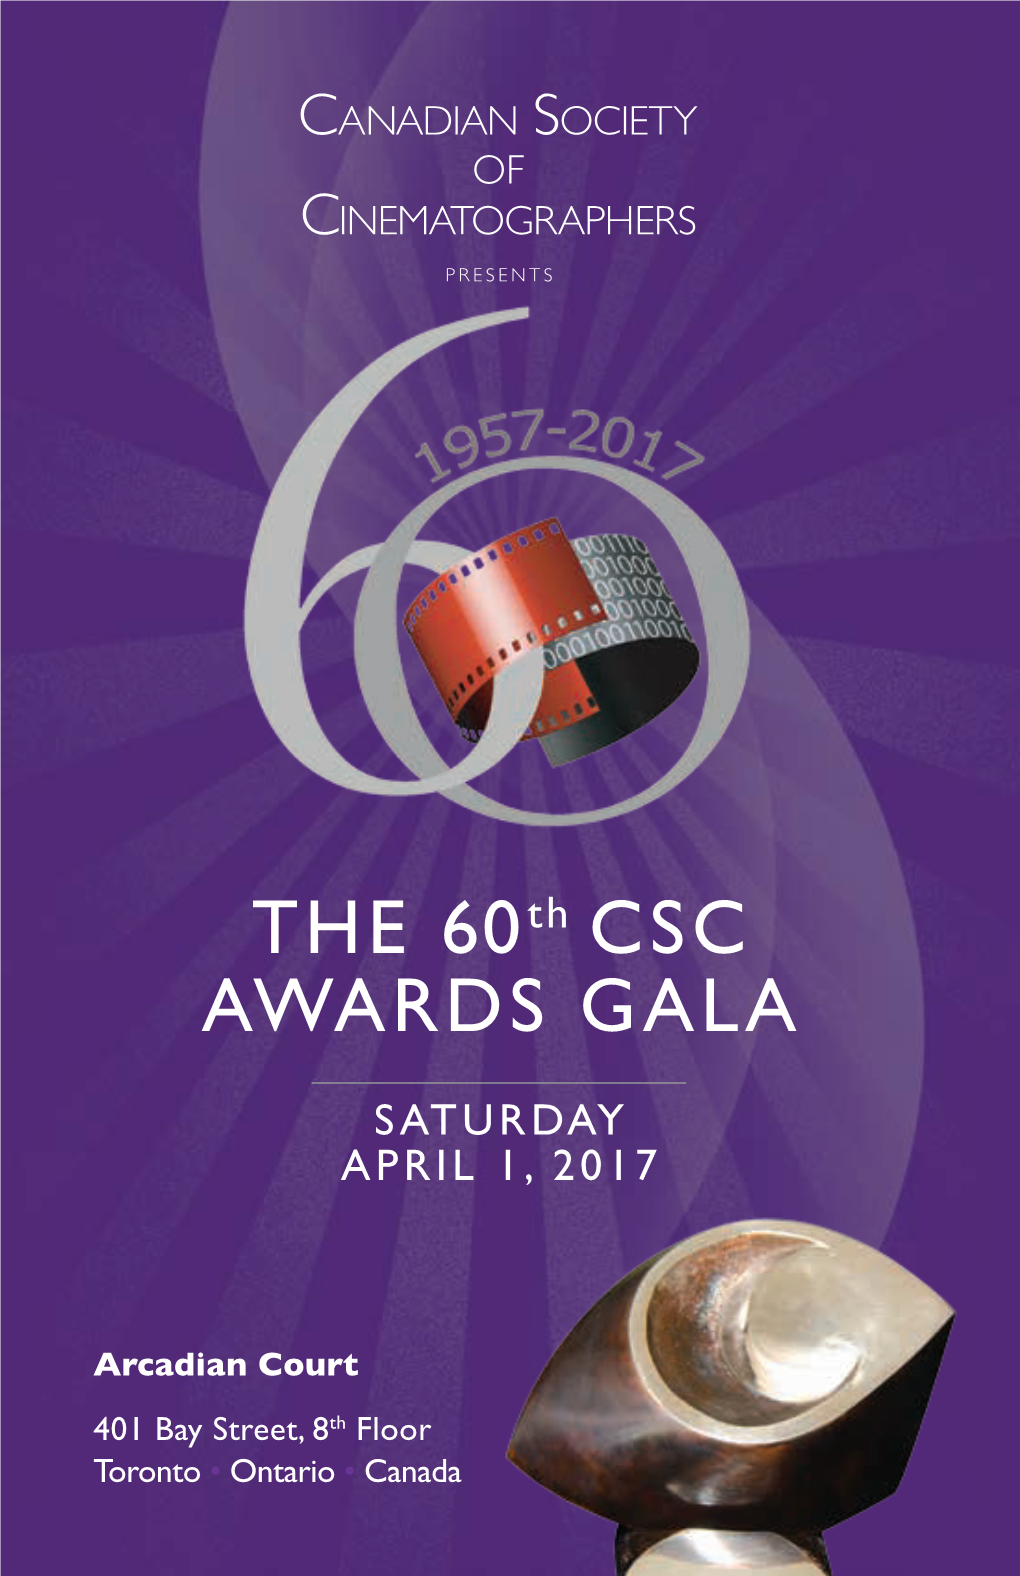 THE 60Th CSC AWARDS GALA